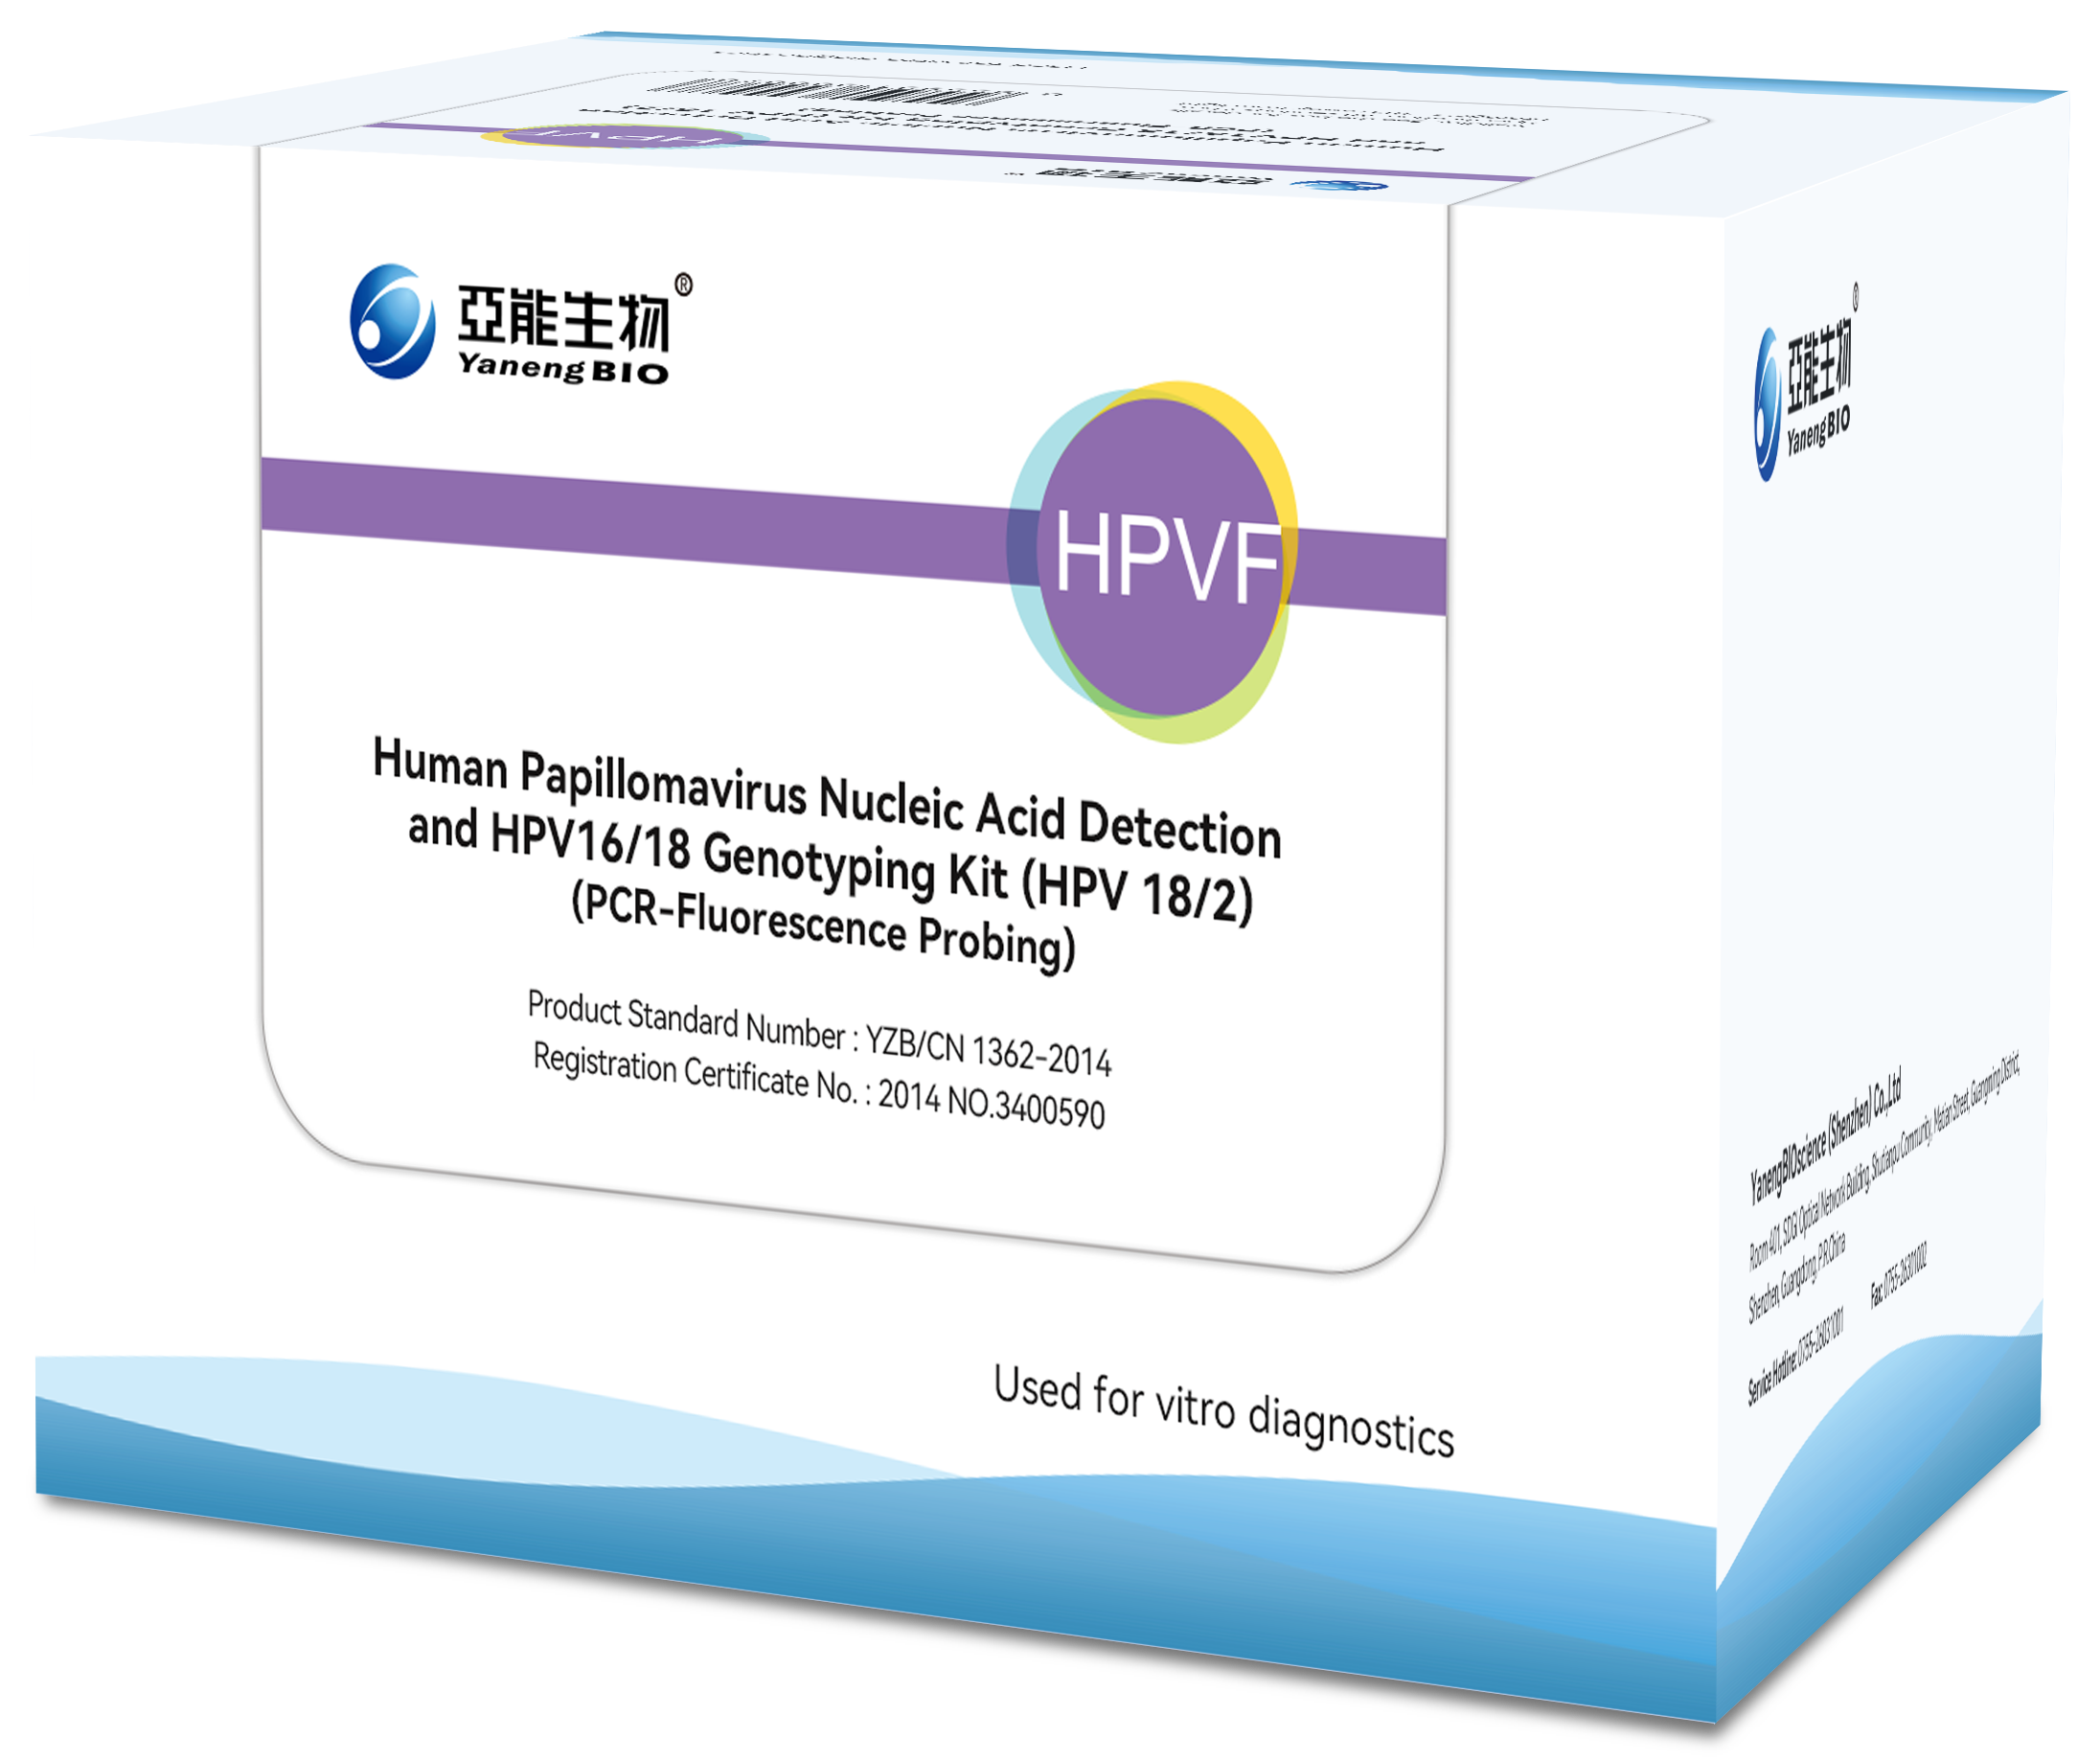 Human Papillomavirus Nucleic Acid Detection and HPV16/18 Genotyping Kit -- HPV 18/2